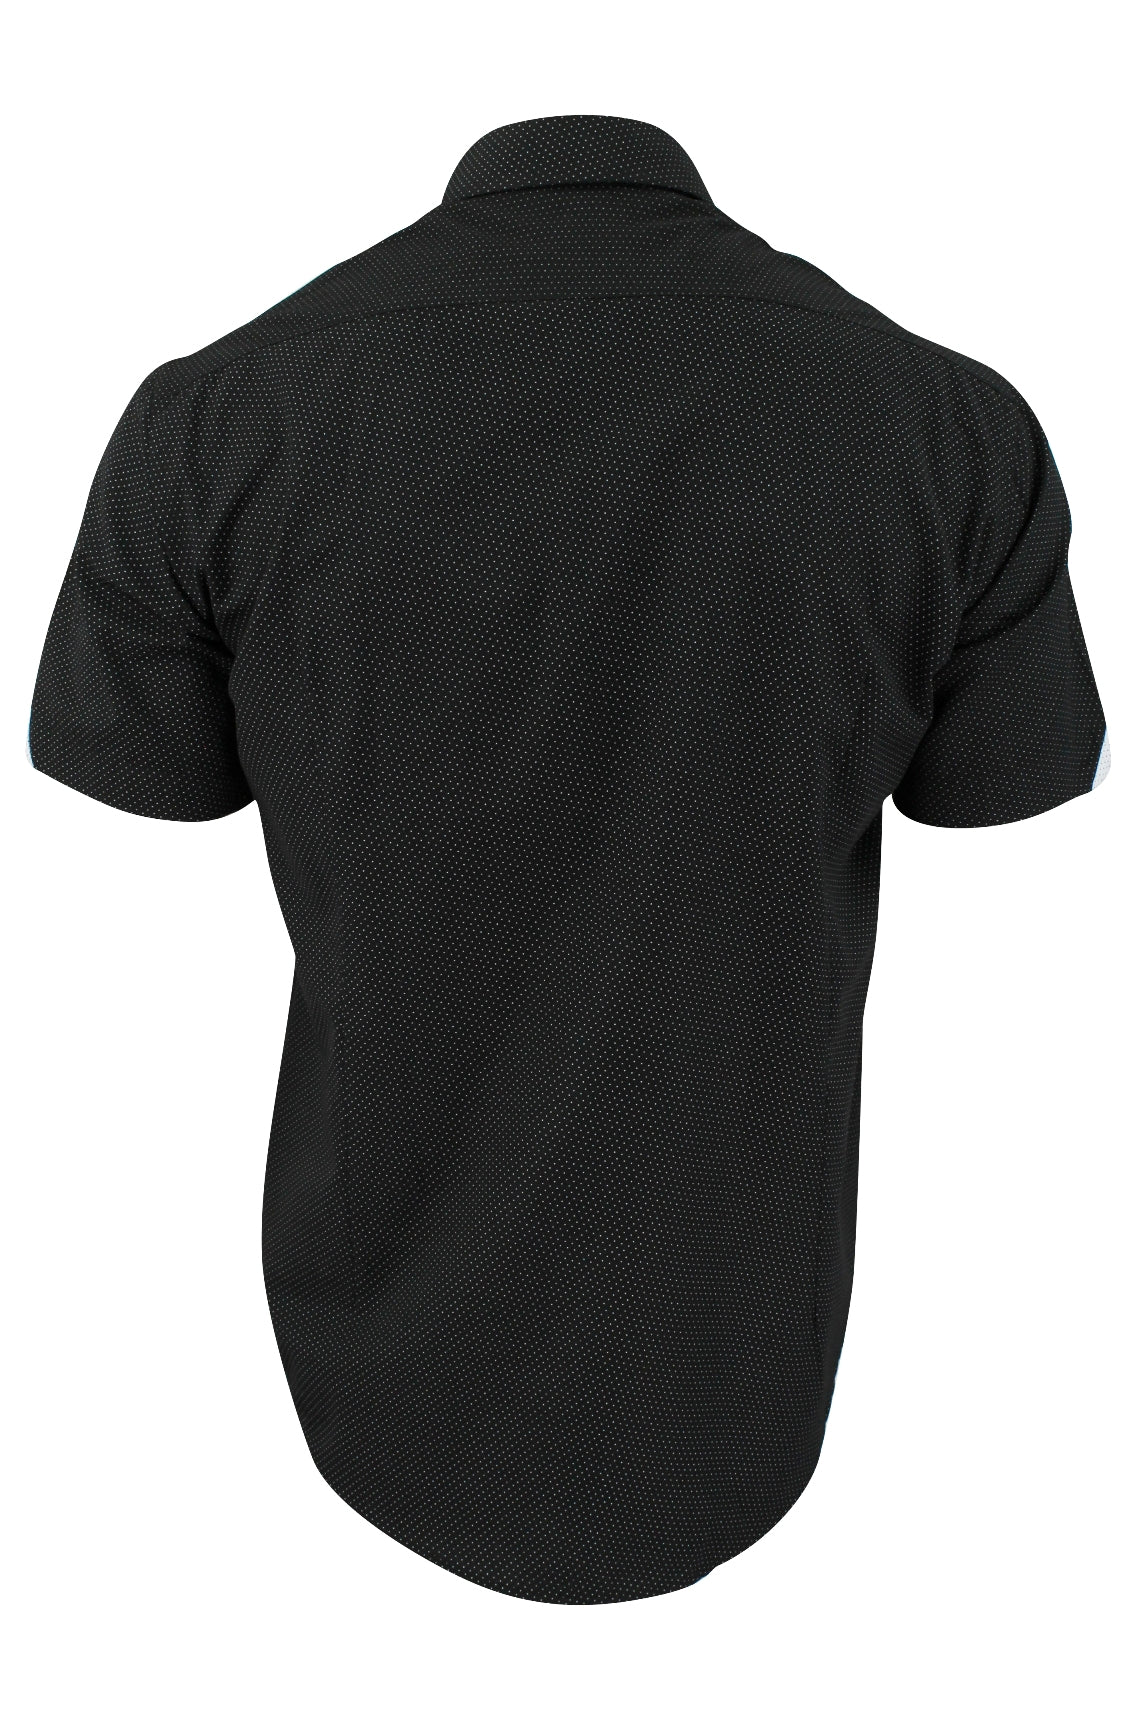 Xact "Mini Polka Dot" Short Sleeved Shirt, 03, K_1510120, Black